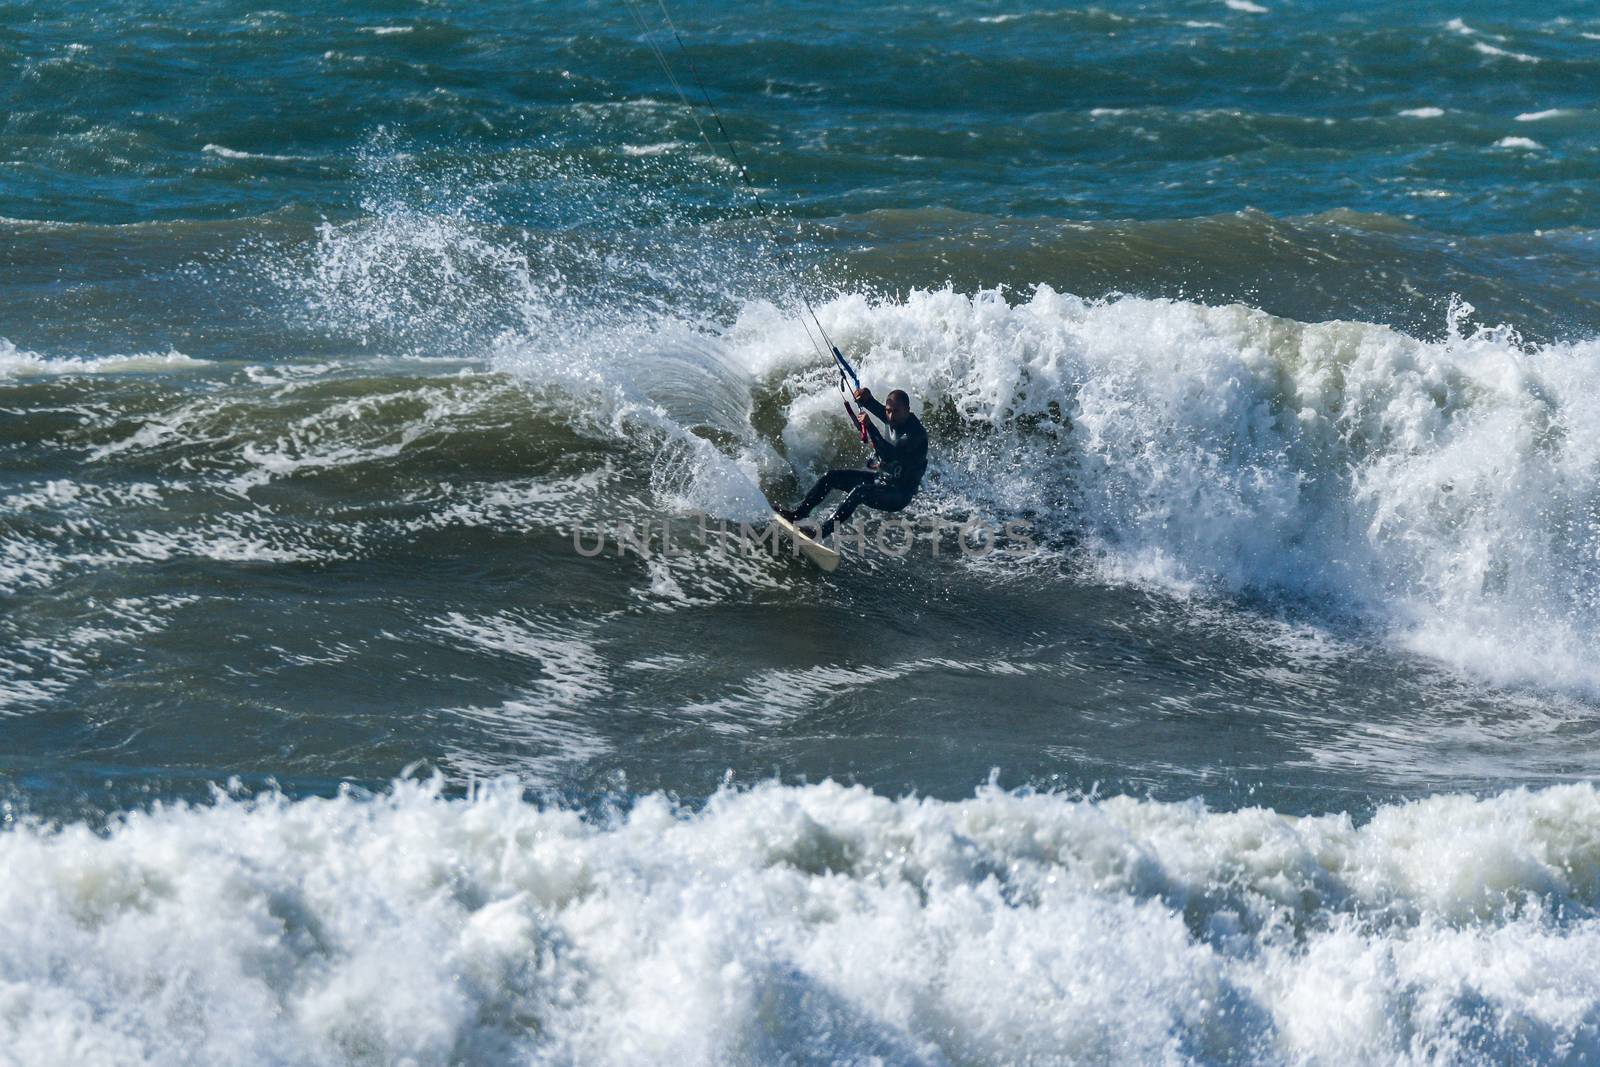 Kitesurfer riding ocean waves on a bright sunny day.